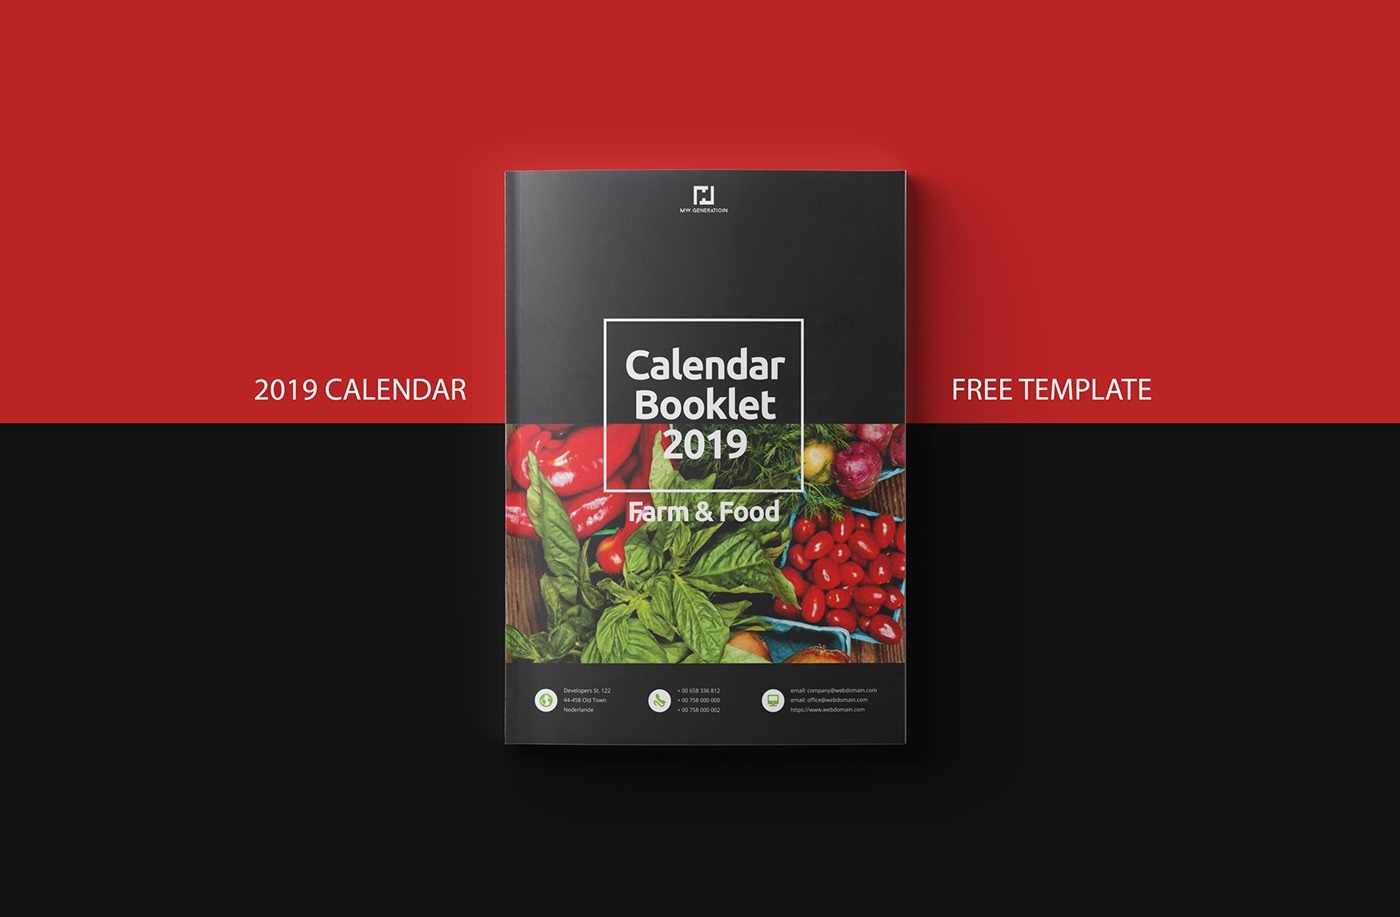 Free Calendar 2019 Indesign Template On Behance Free Calendar Indesign Template